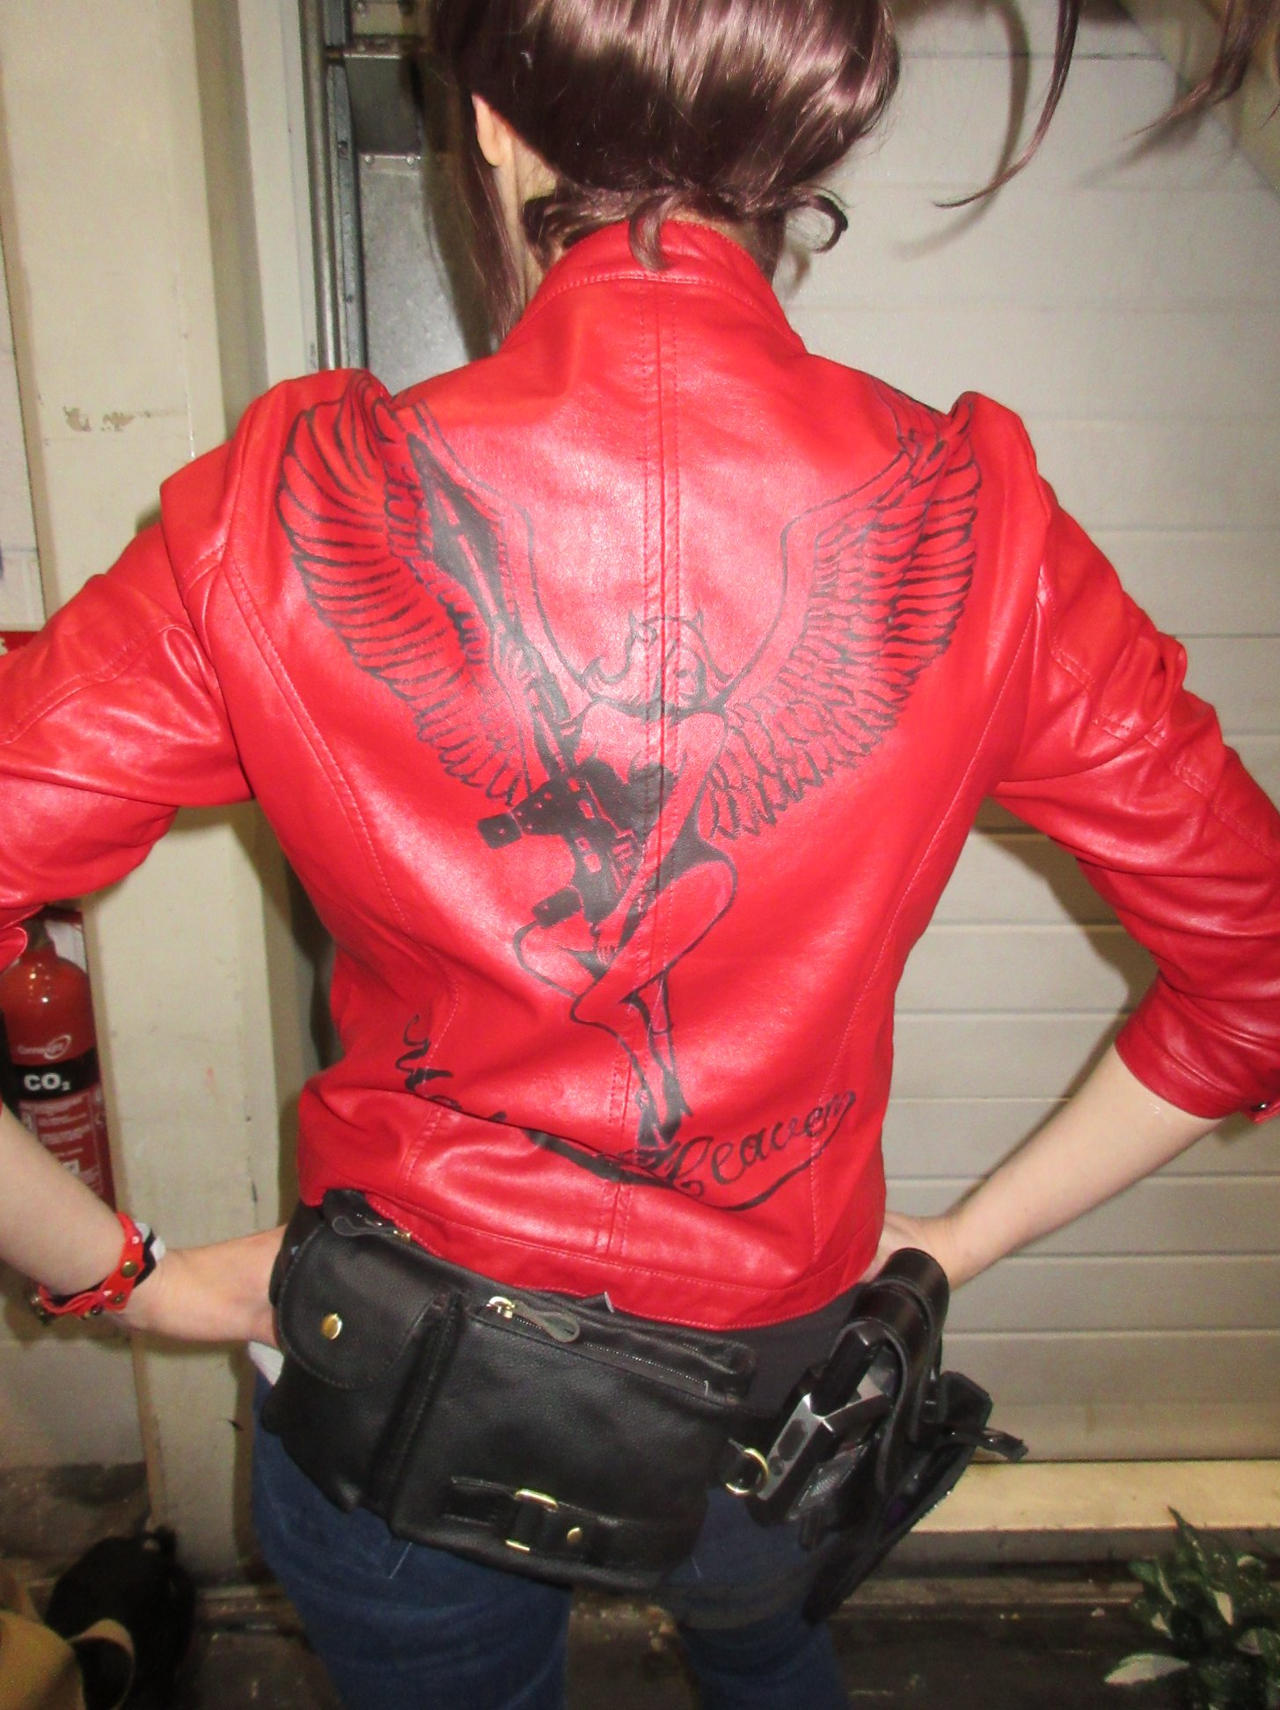 Claire Redfield Resident Evil 2 Jacket, JacketsInn